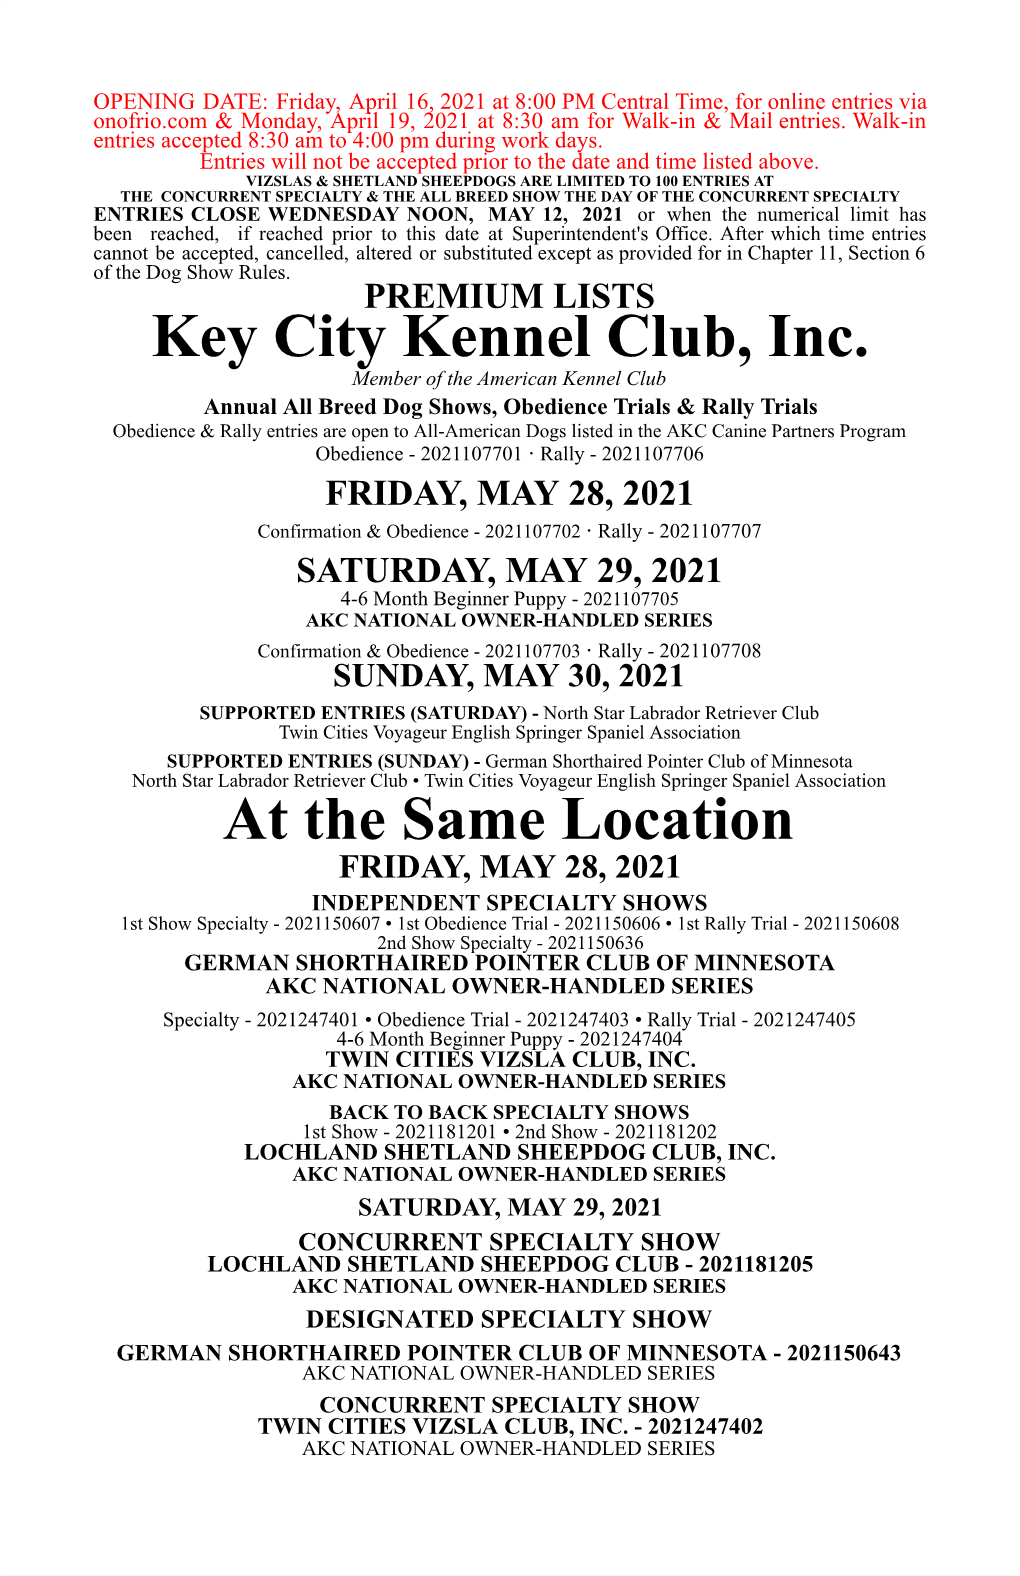 Key City Kennel Club, Inc. at the Same Location